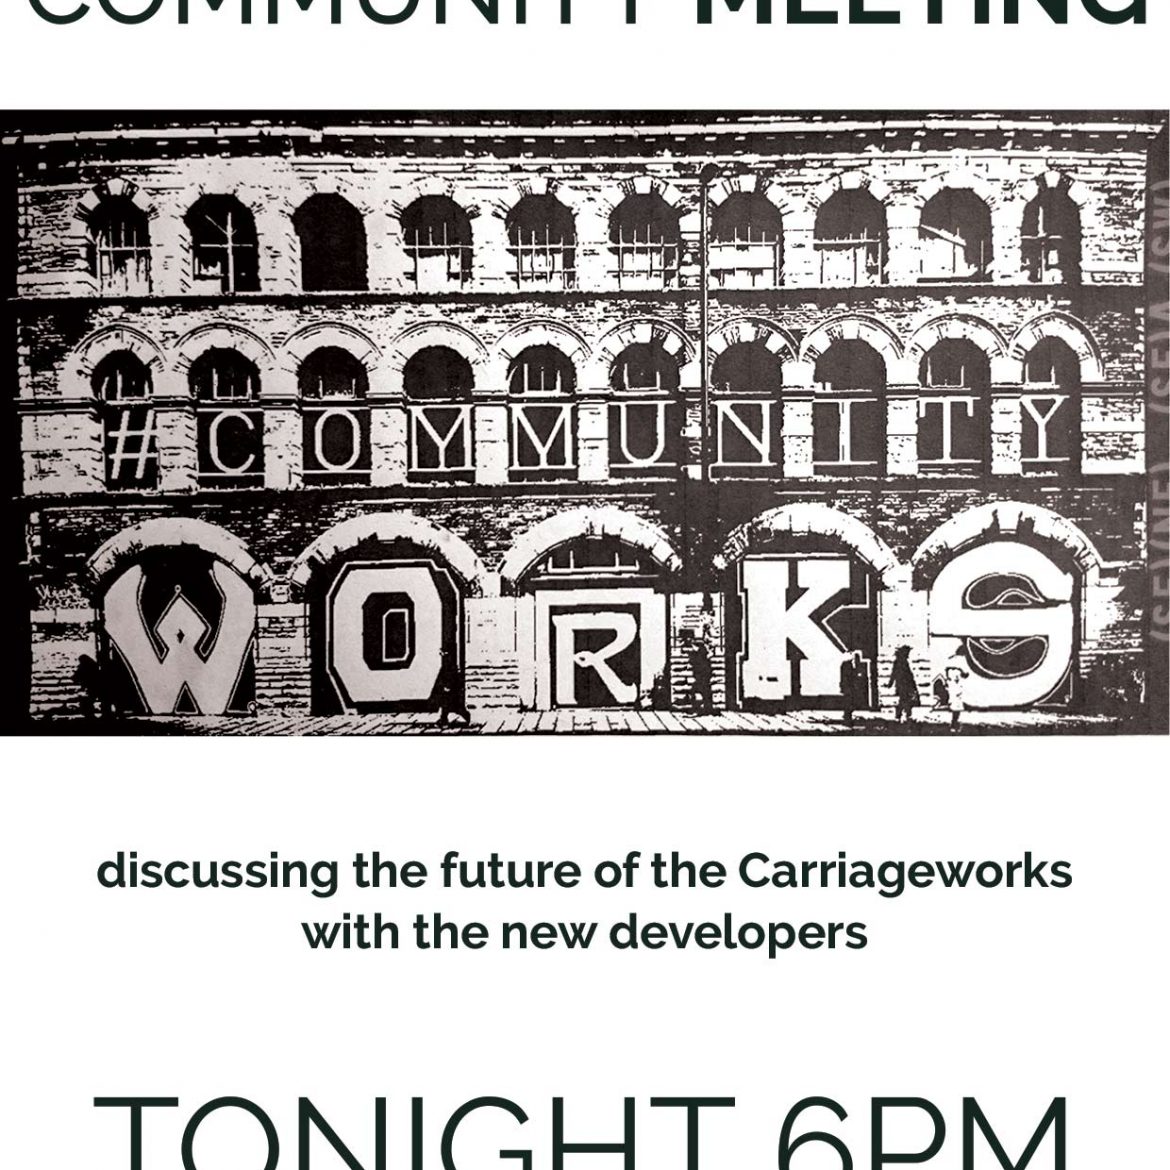 Carriageworks community meeting